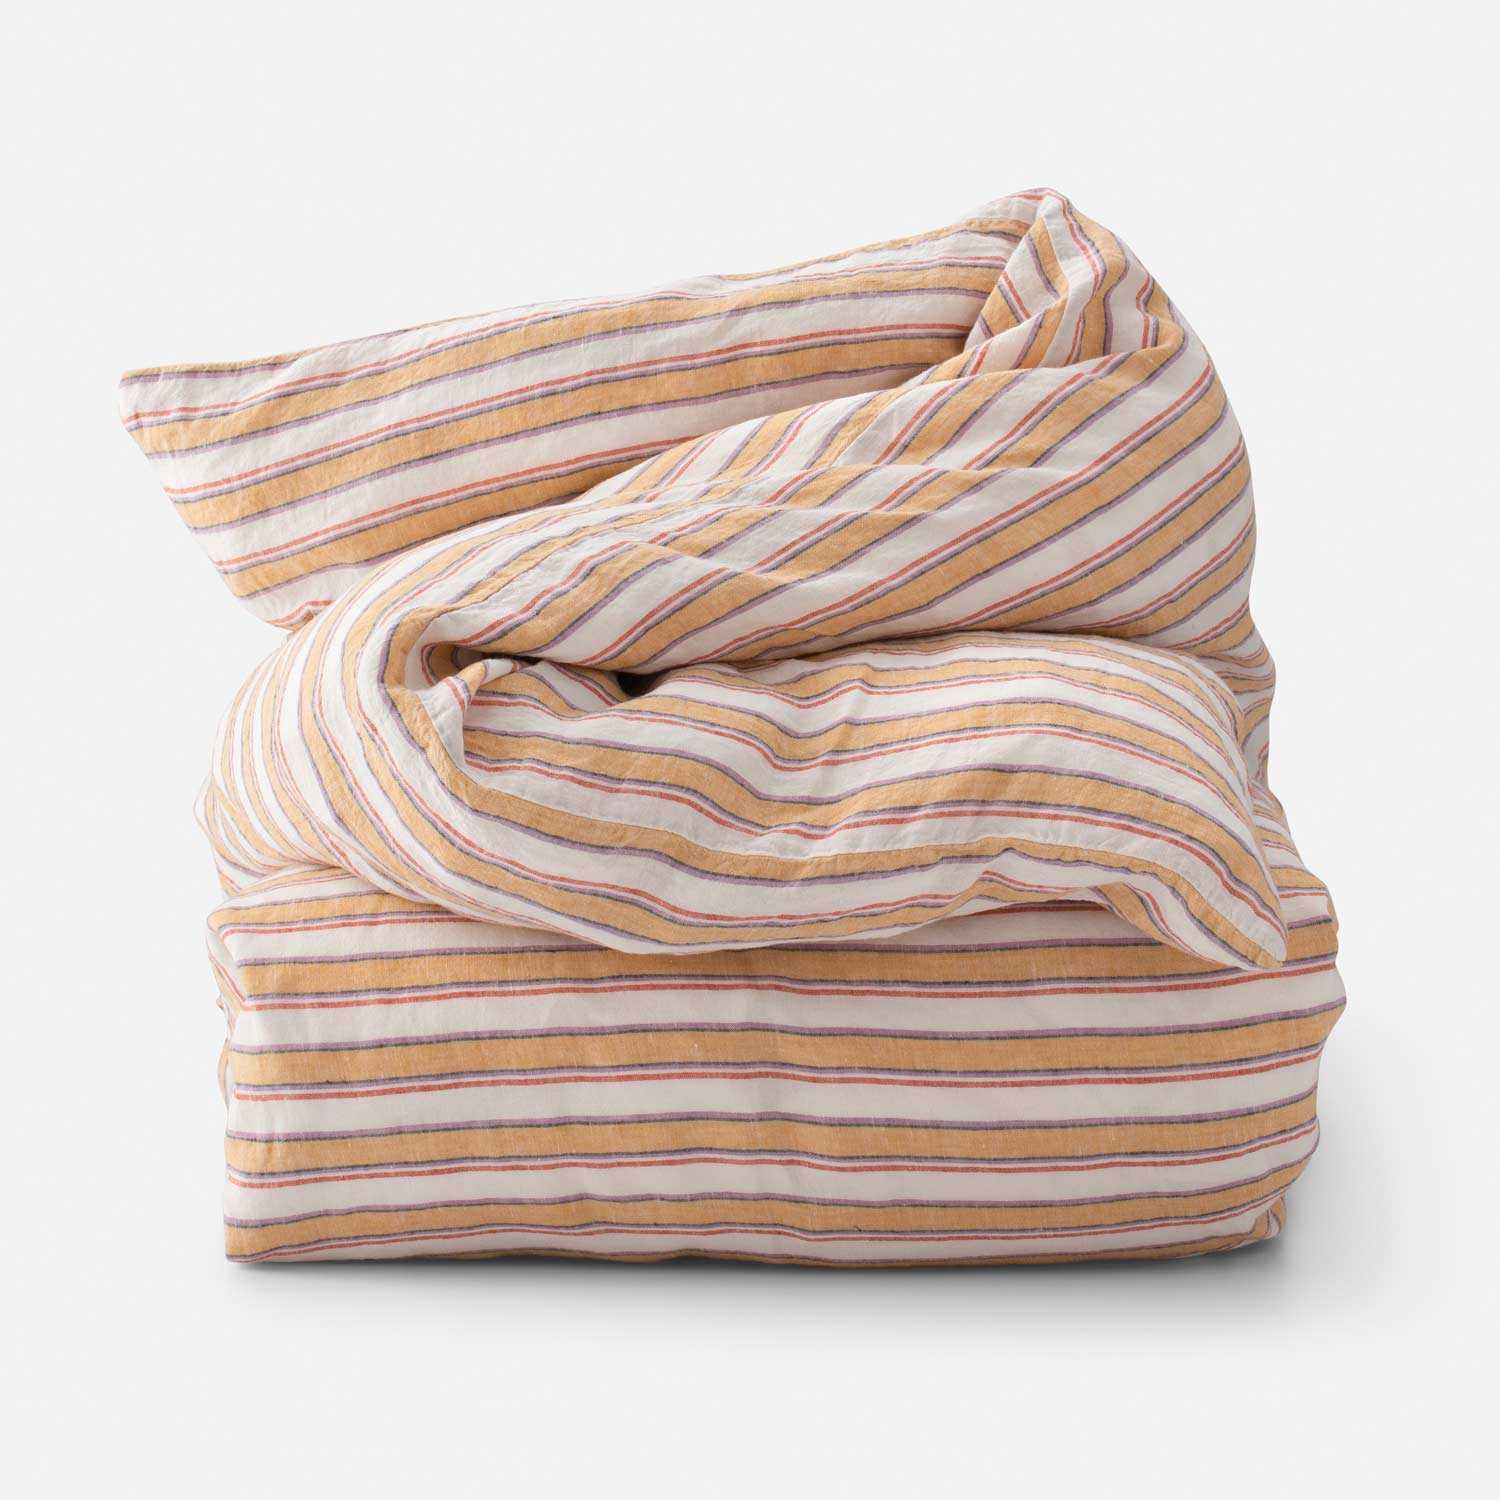 Market Stripe Linen Duvet Cover in Apricot Stripe Size Full/Queen by Schoolhouse